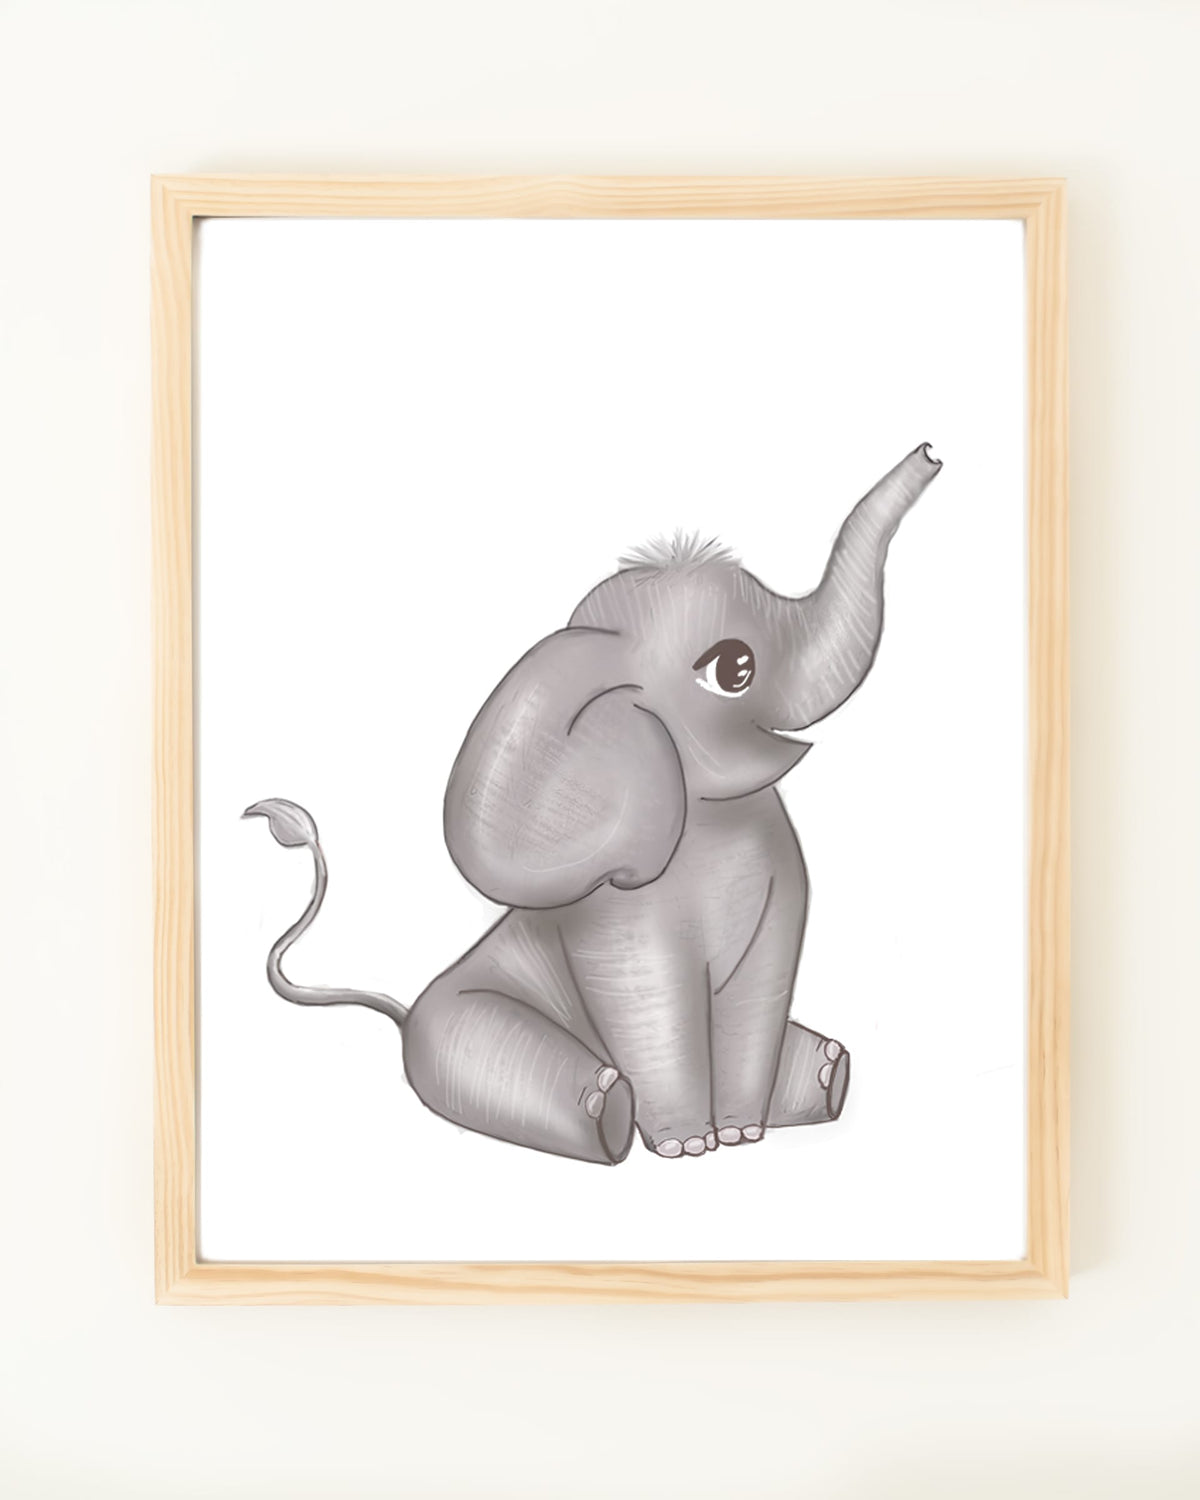 Framed hand drawn safari nursery decor wall art poster cute elephant baby animal 